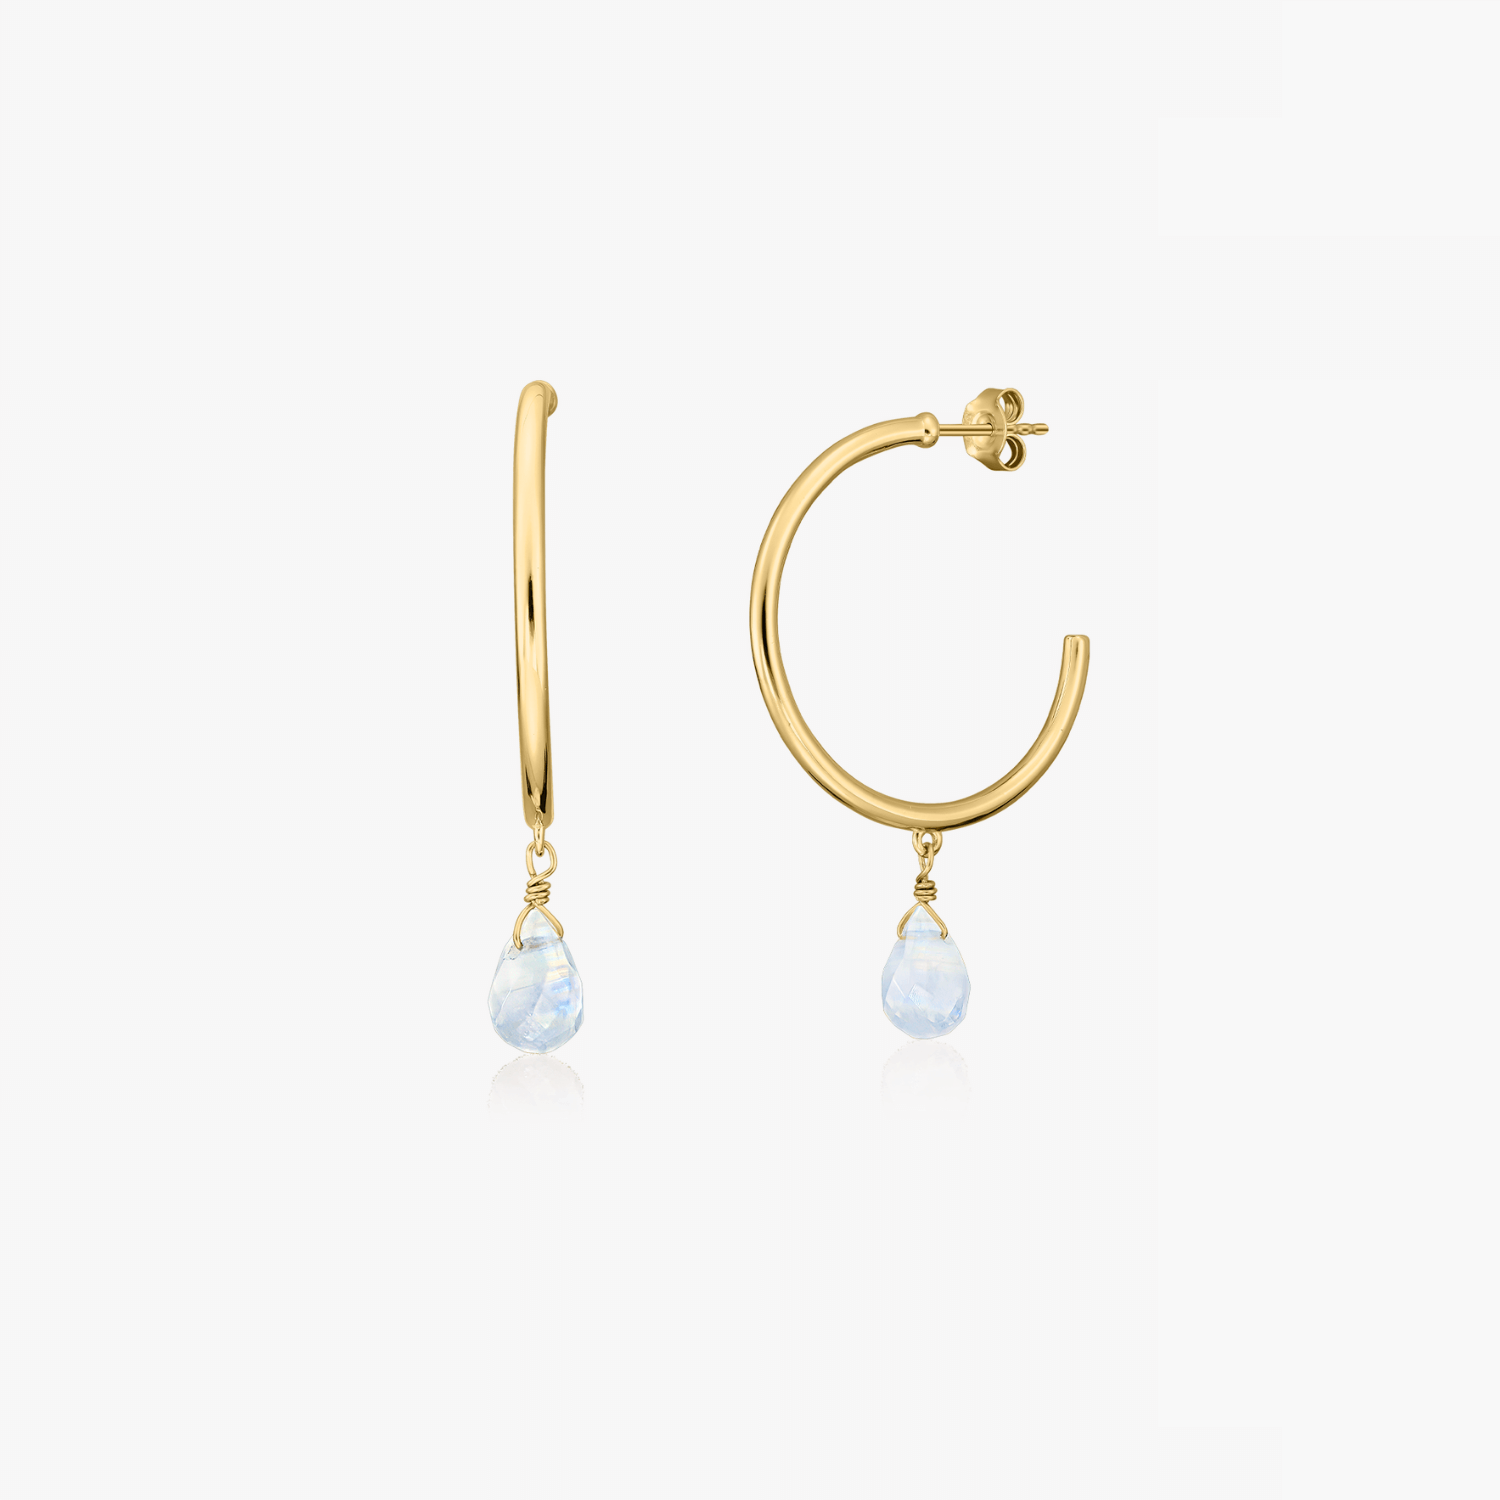 Rainbow Golden silver earrings - Moonstone